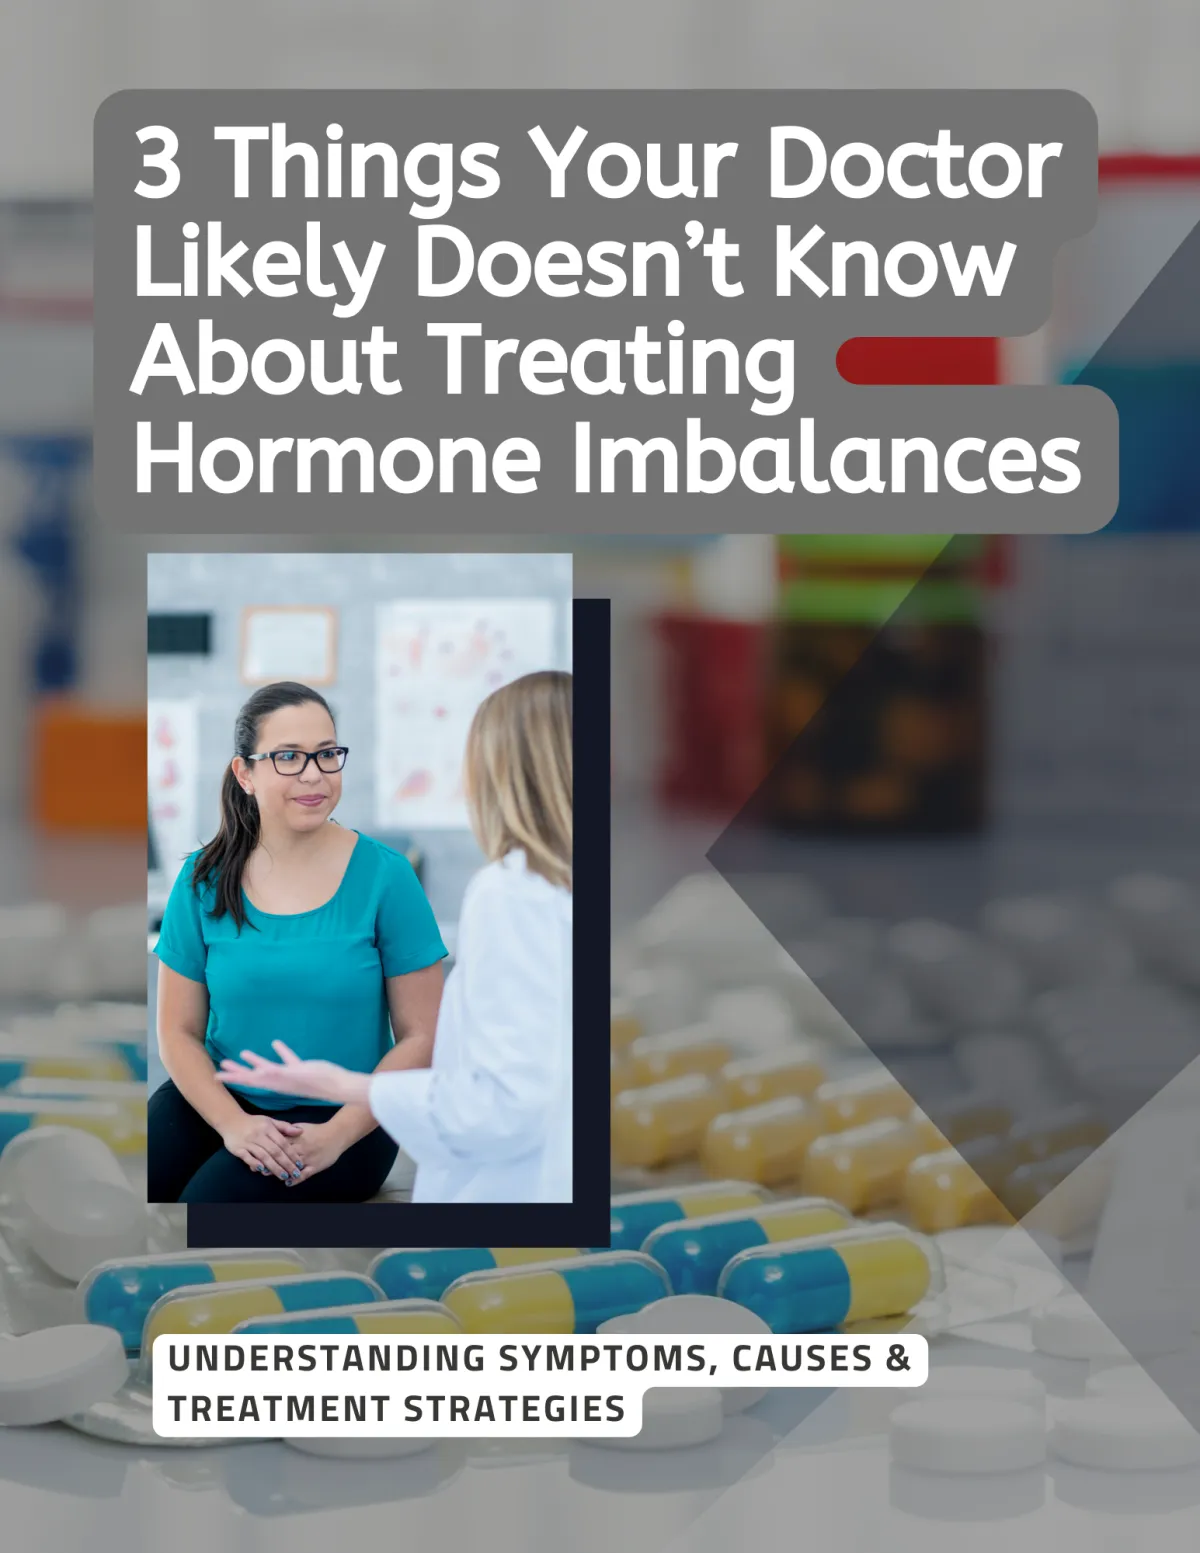 Treating Hormone Imbalances